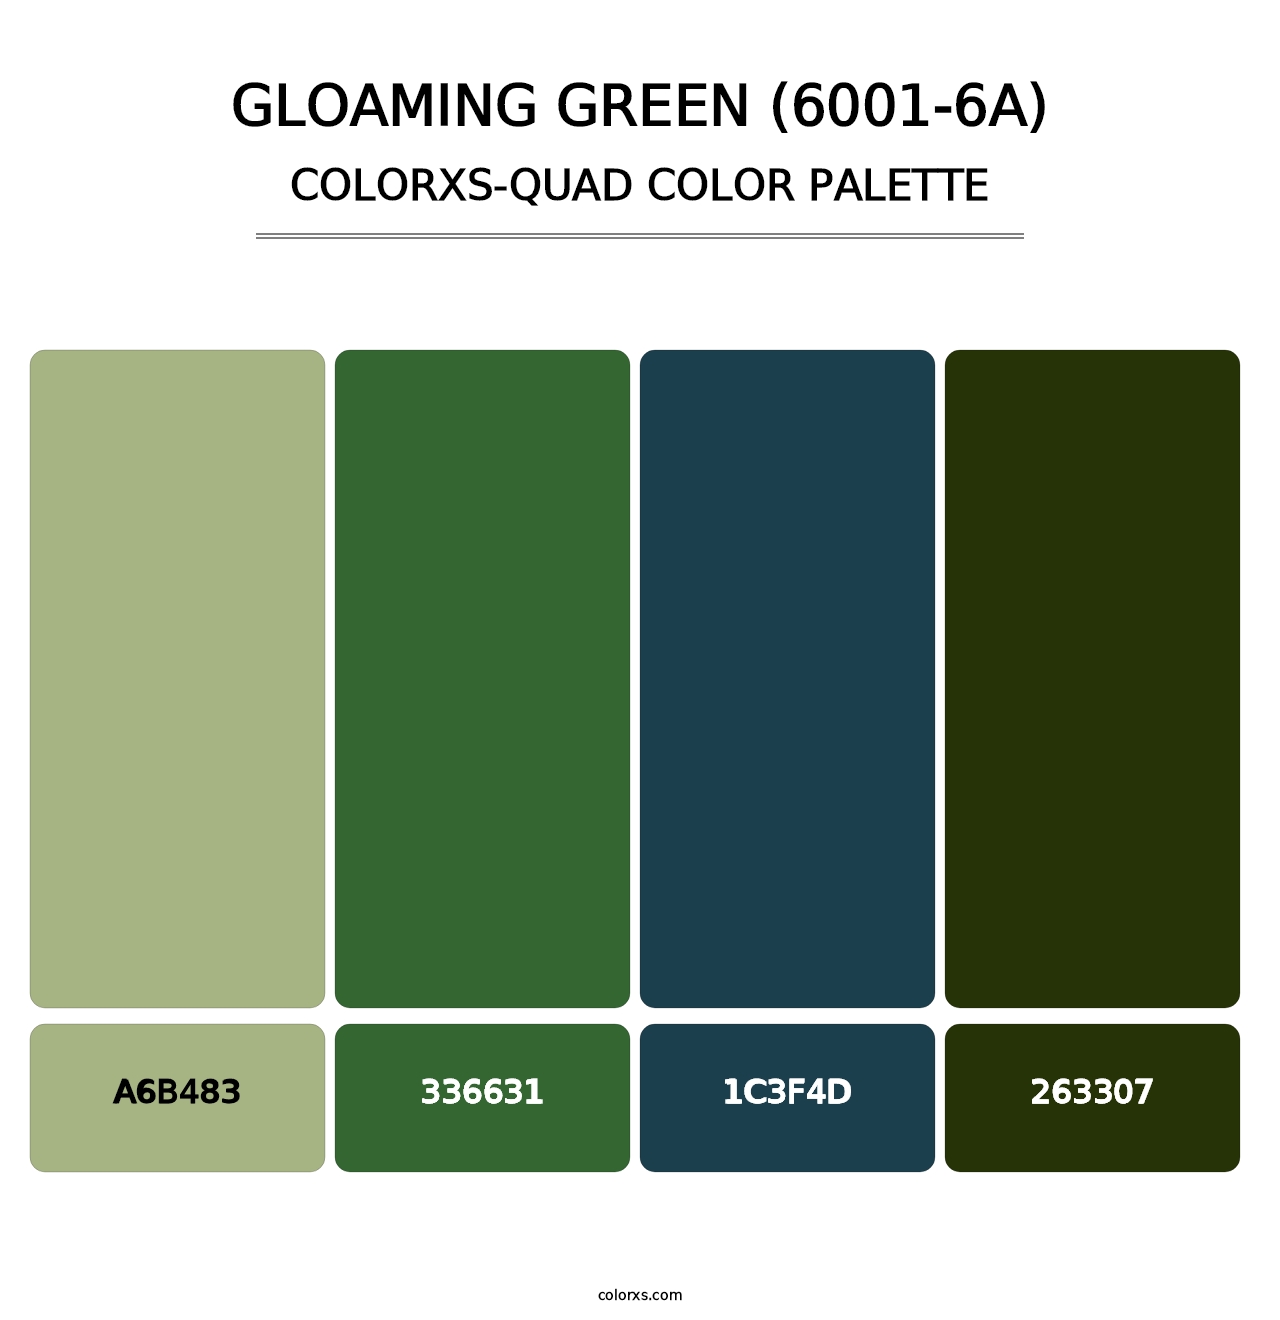 Gloaming Green (6001-6A) - Colorxs Quad Palette